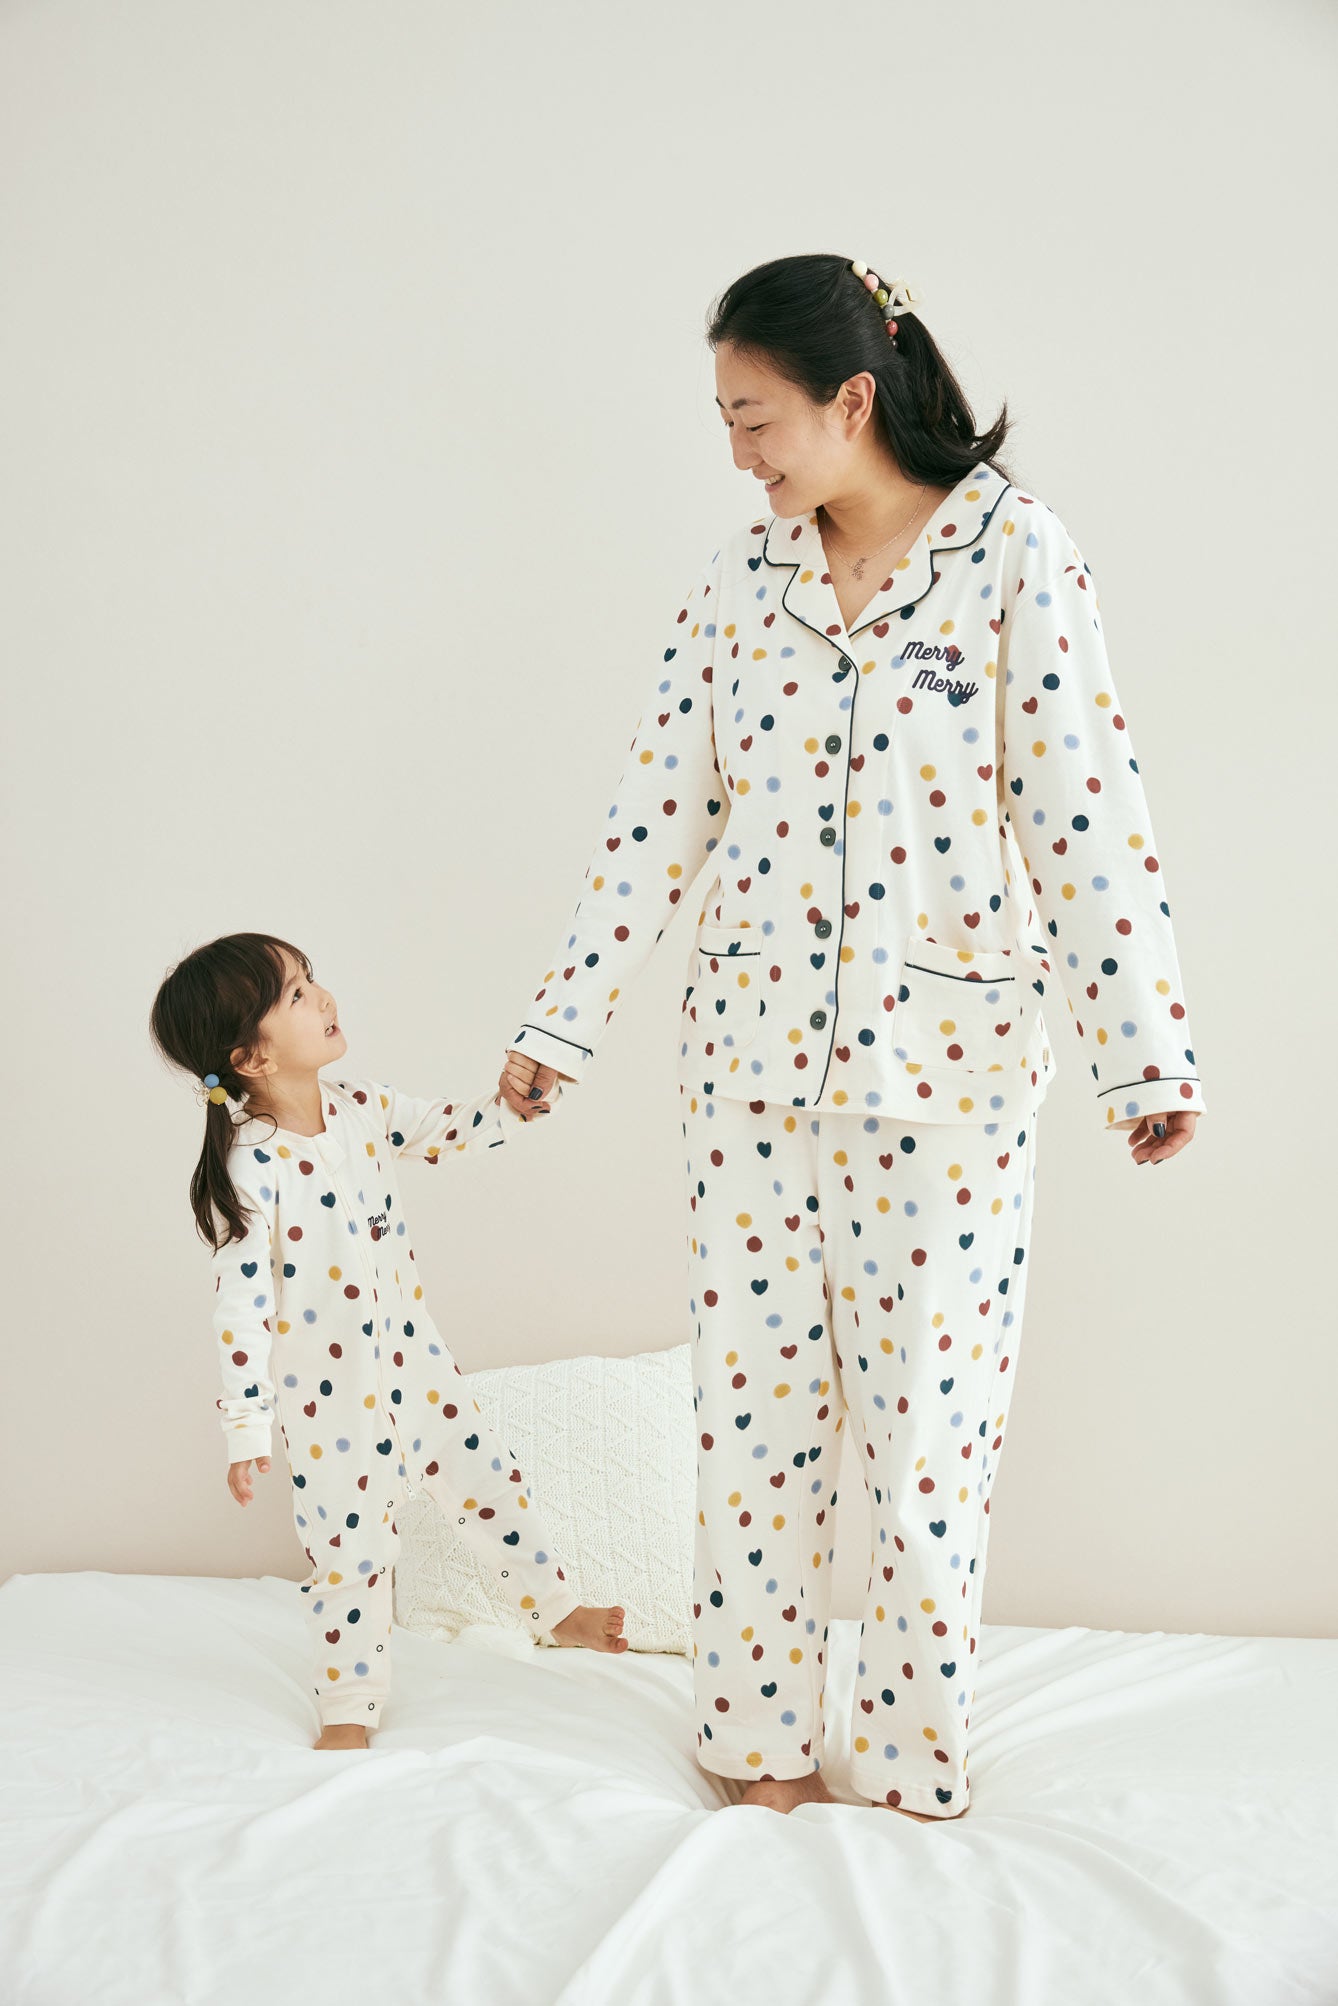 Model with her daughter wearing matching pajama set